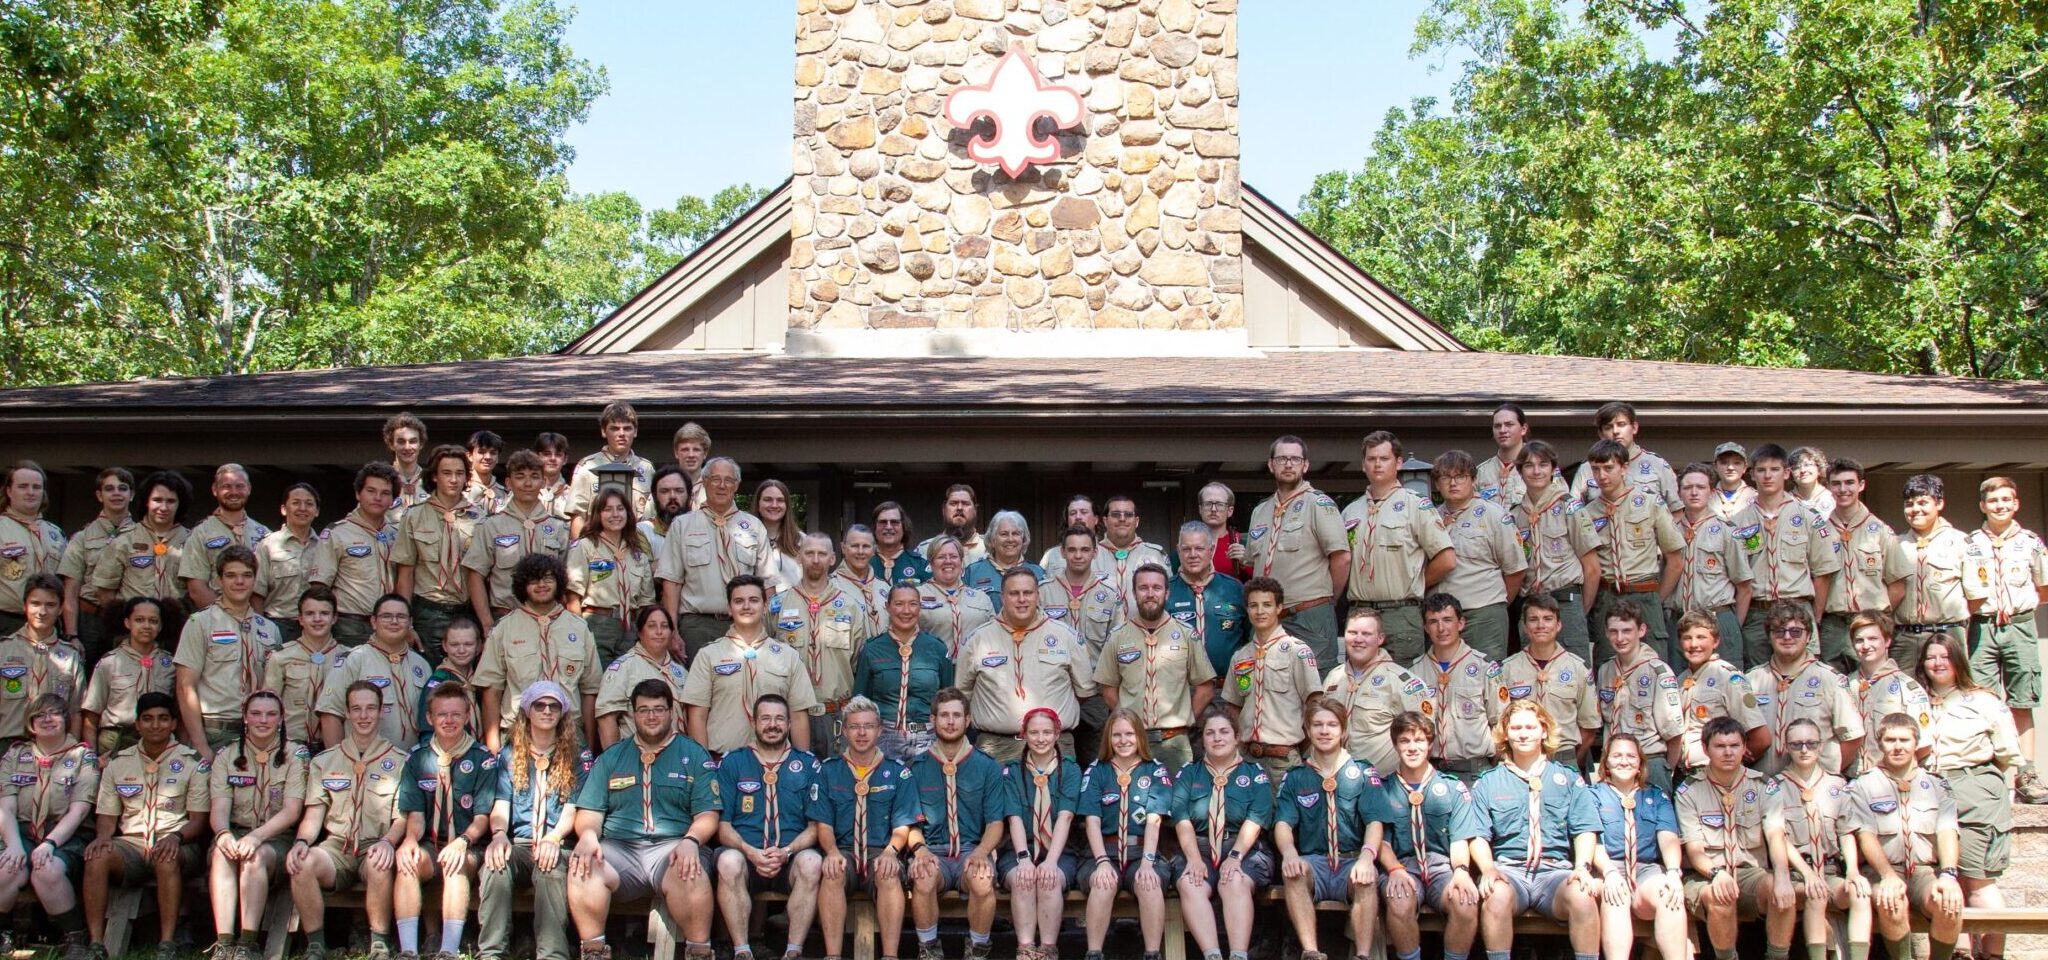 Greater St. Louis Area Council Camp Staff Alumni